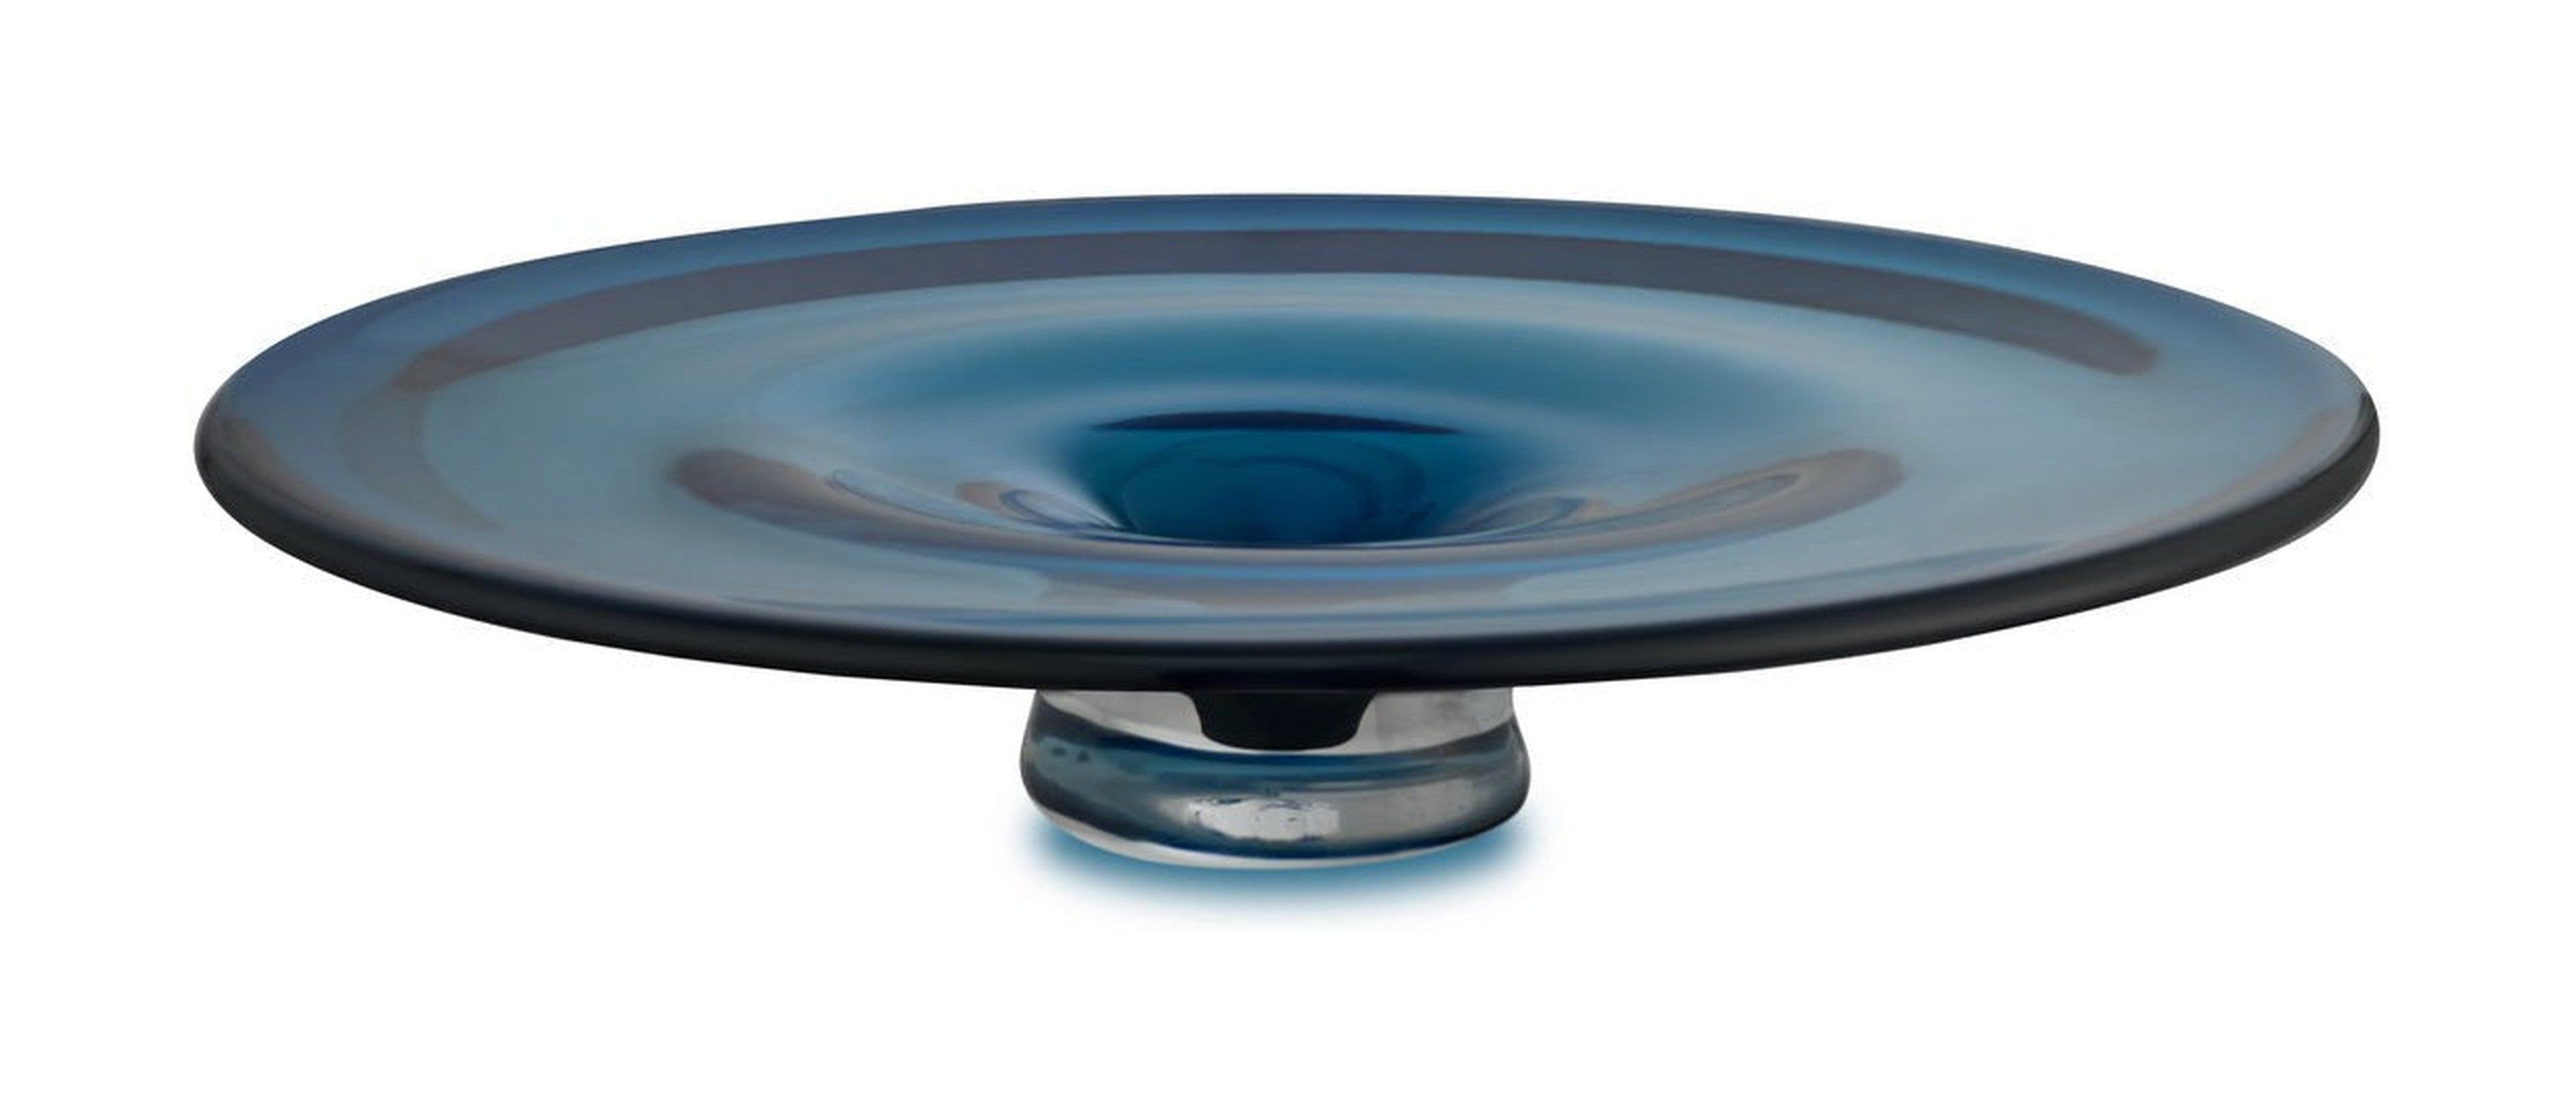 round conical vase or bowl, deep ink blue color: ALAIN